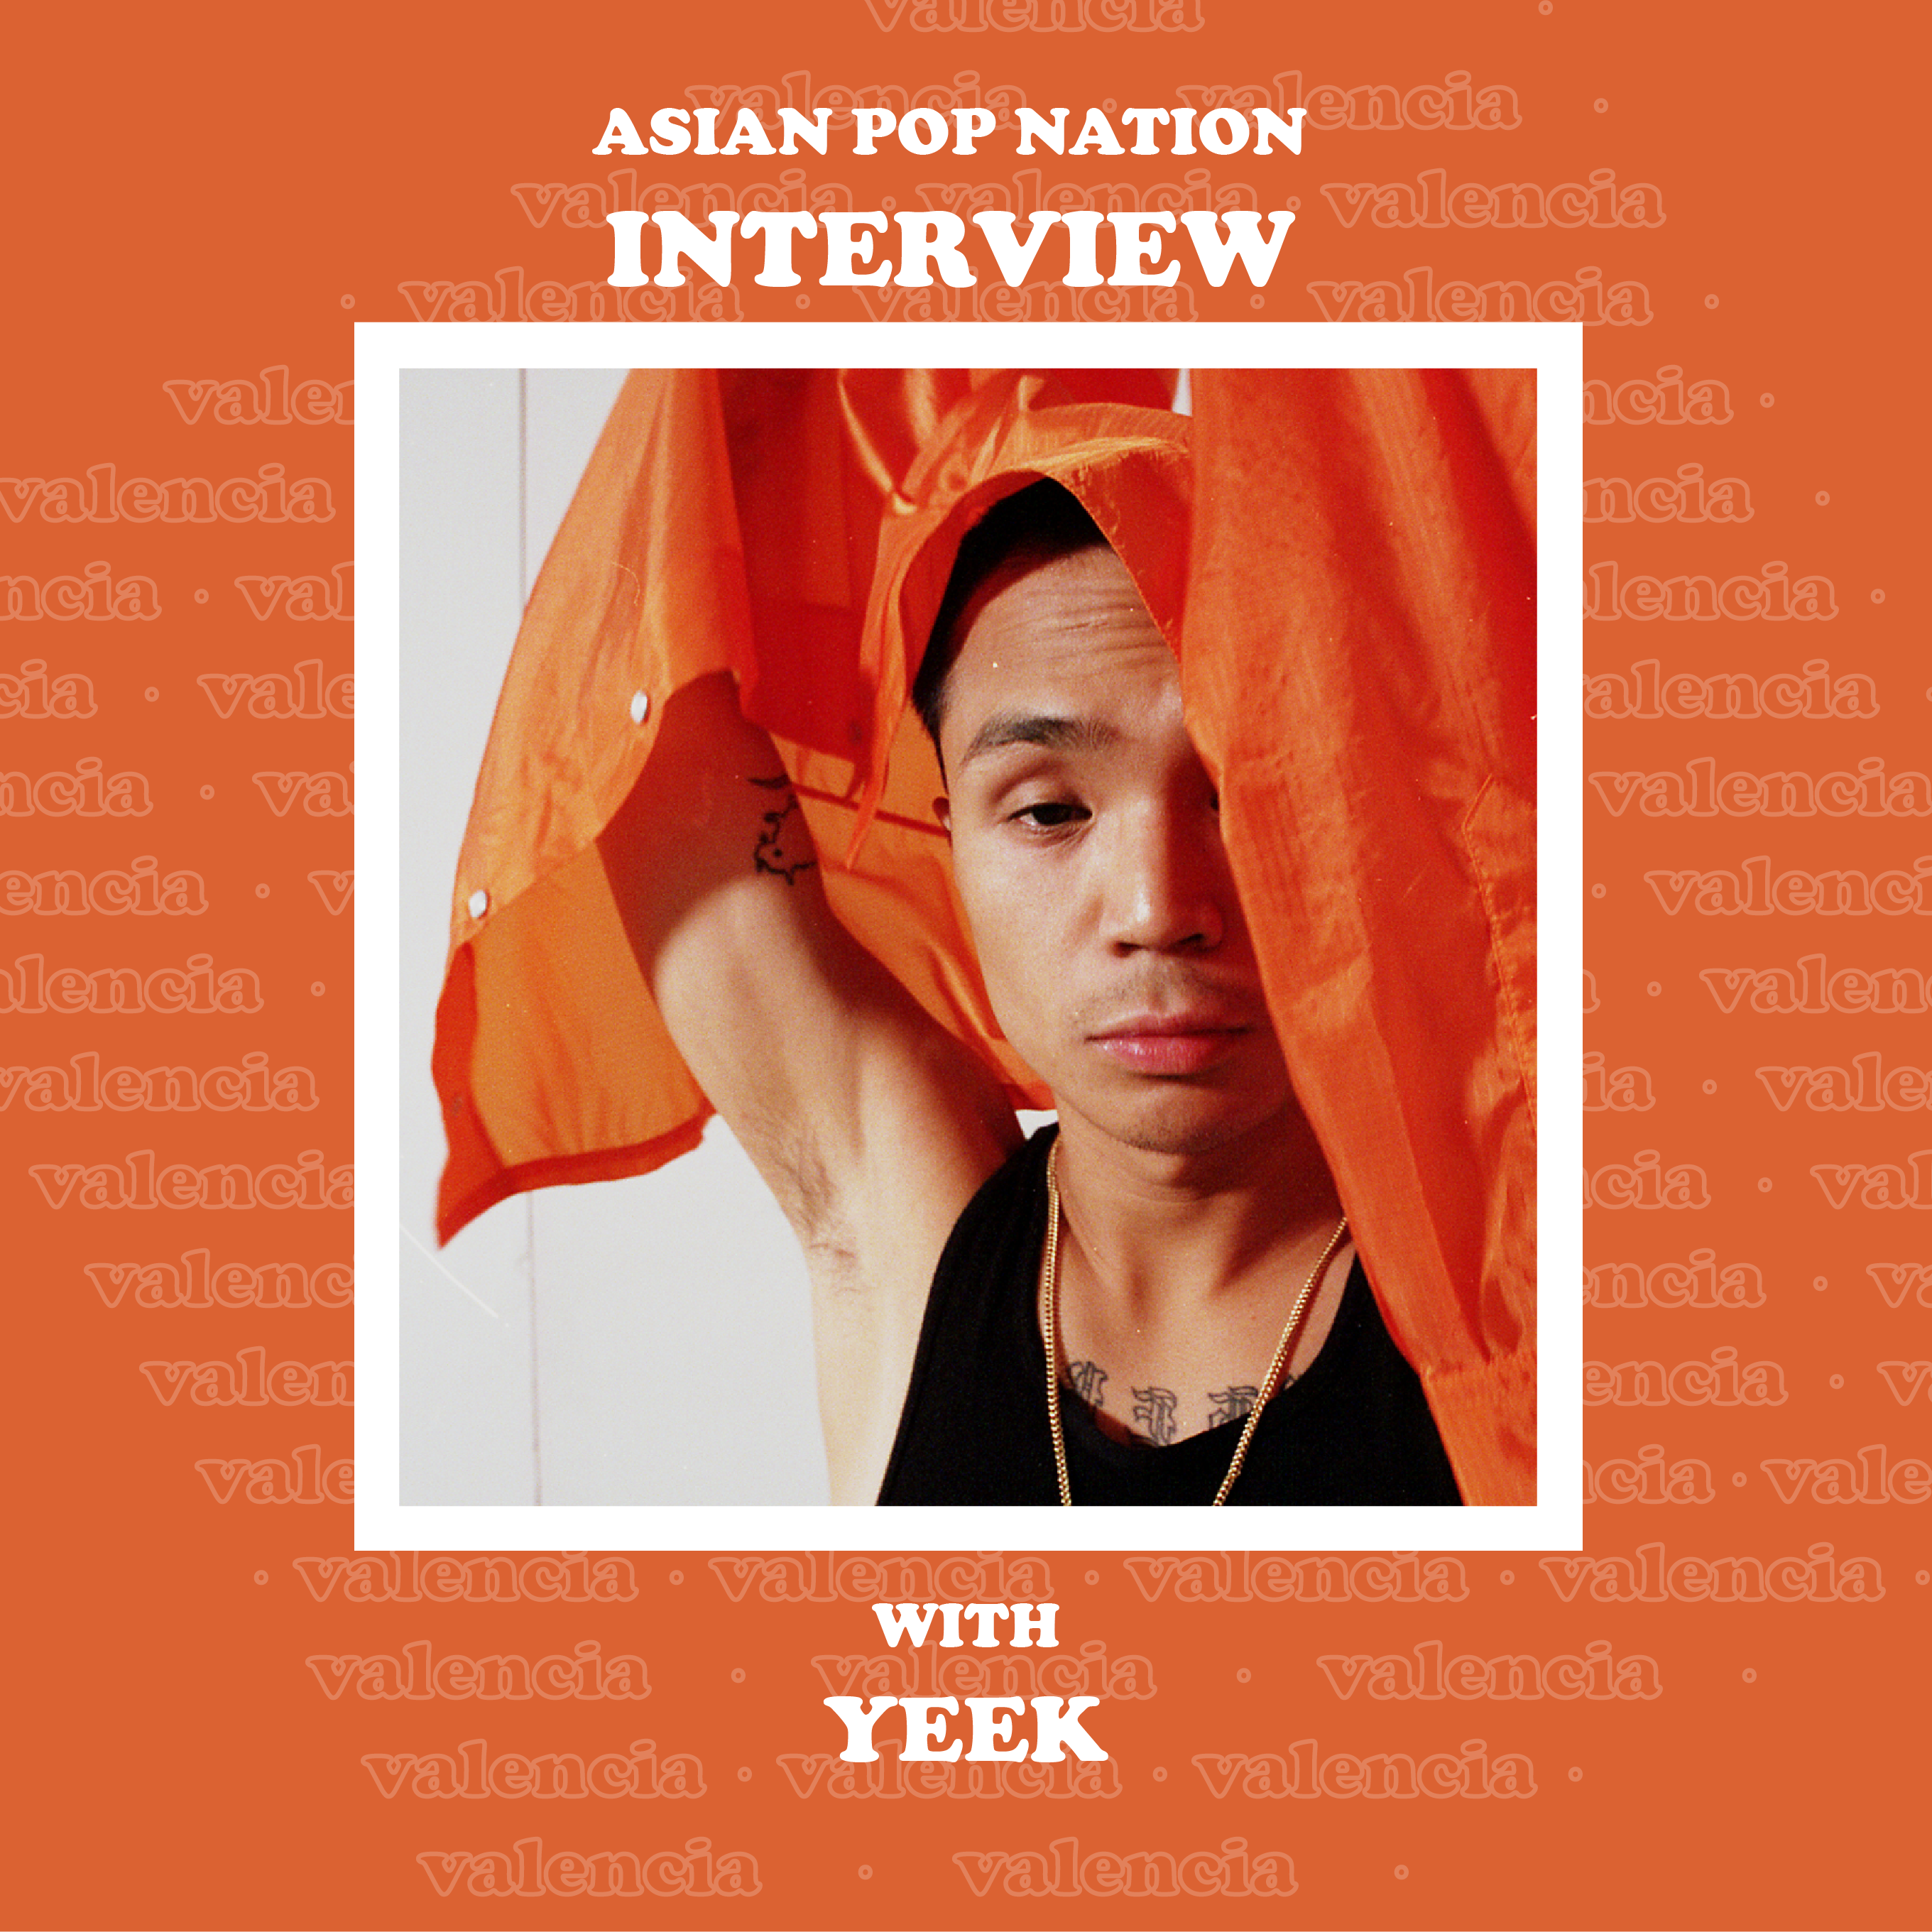 APN's Interview with YEEK